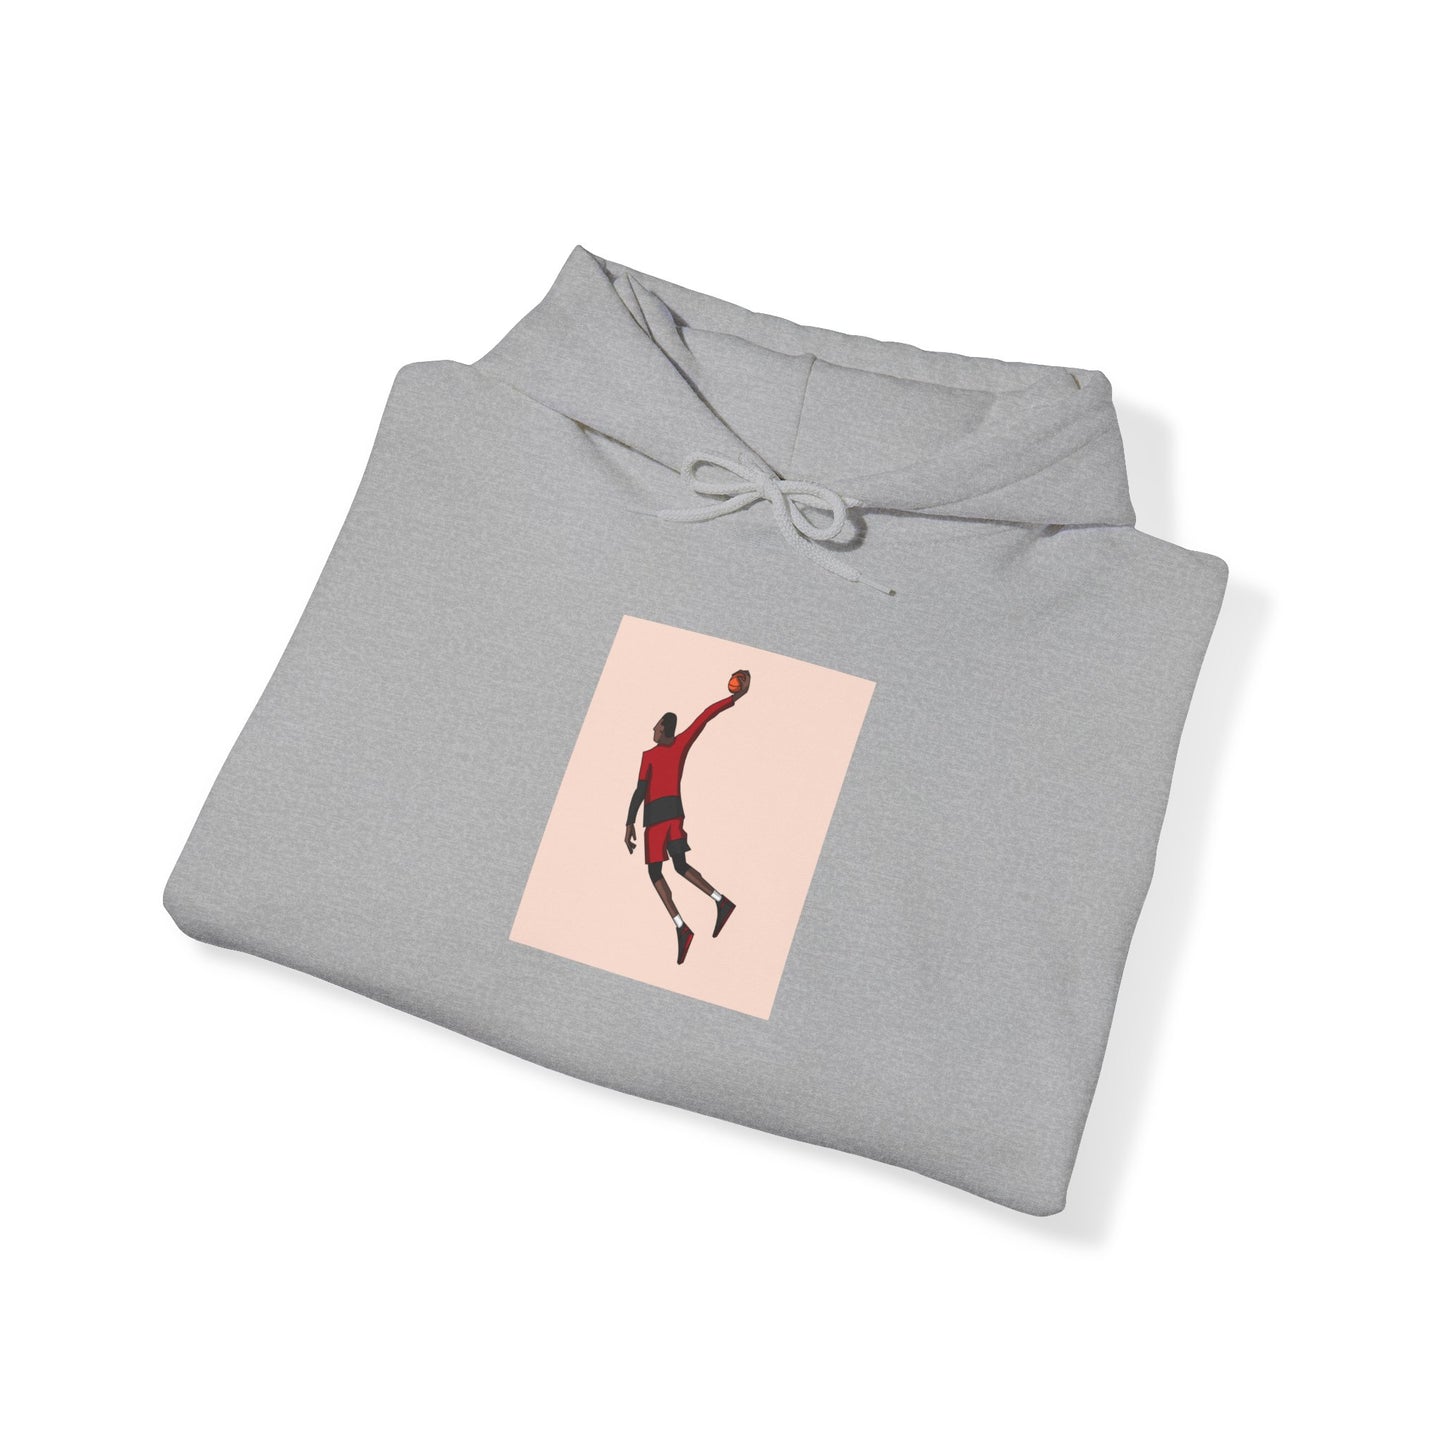 Basketball Art Unisex Heavy Blend™ Hooded Sweatshirt